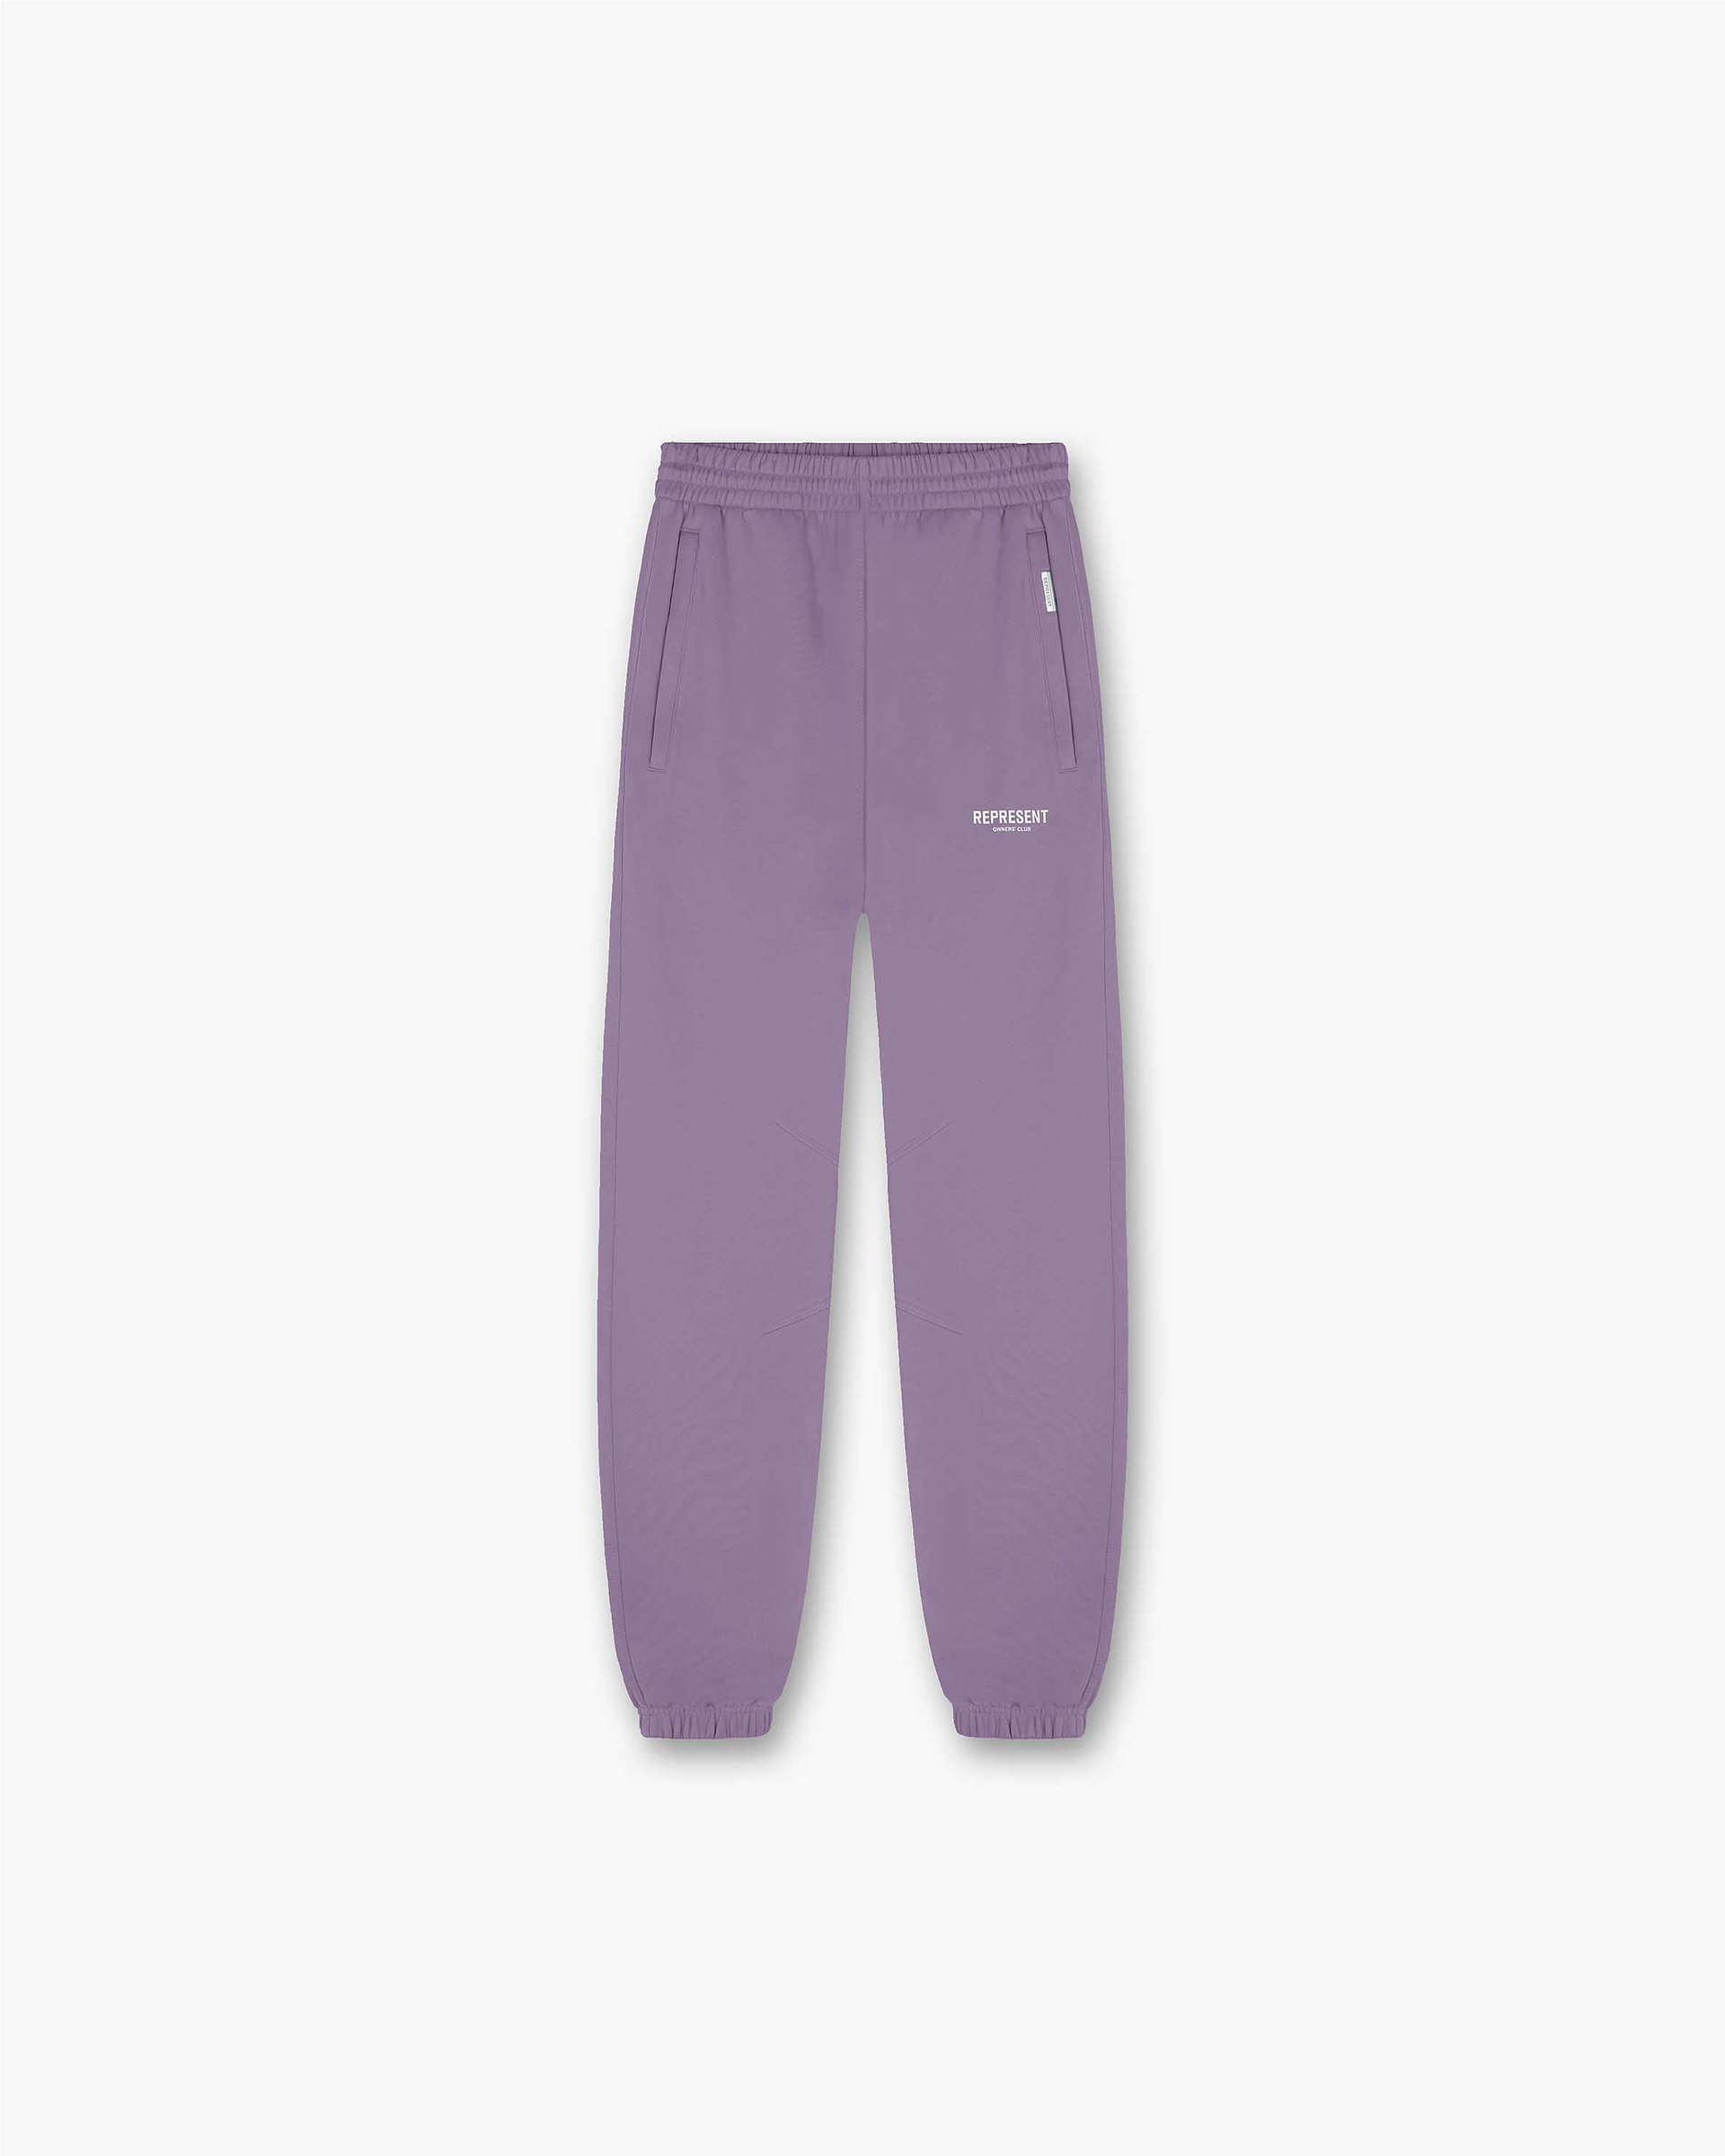 Represent Owners Club Sweatpants - Vintage Violet